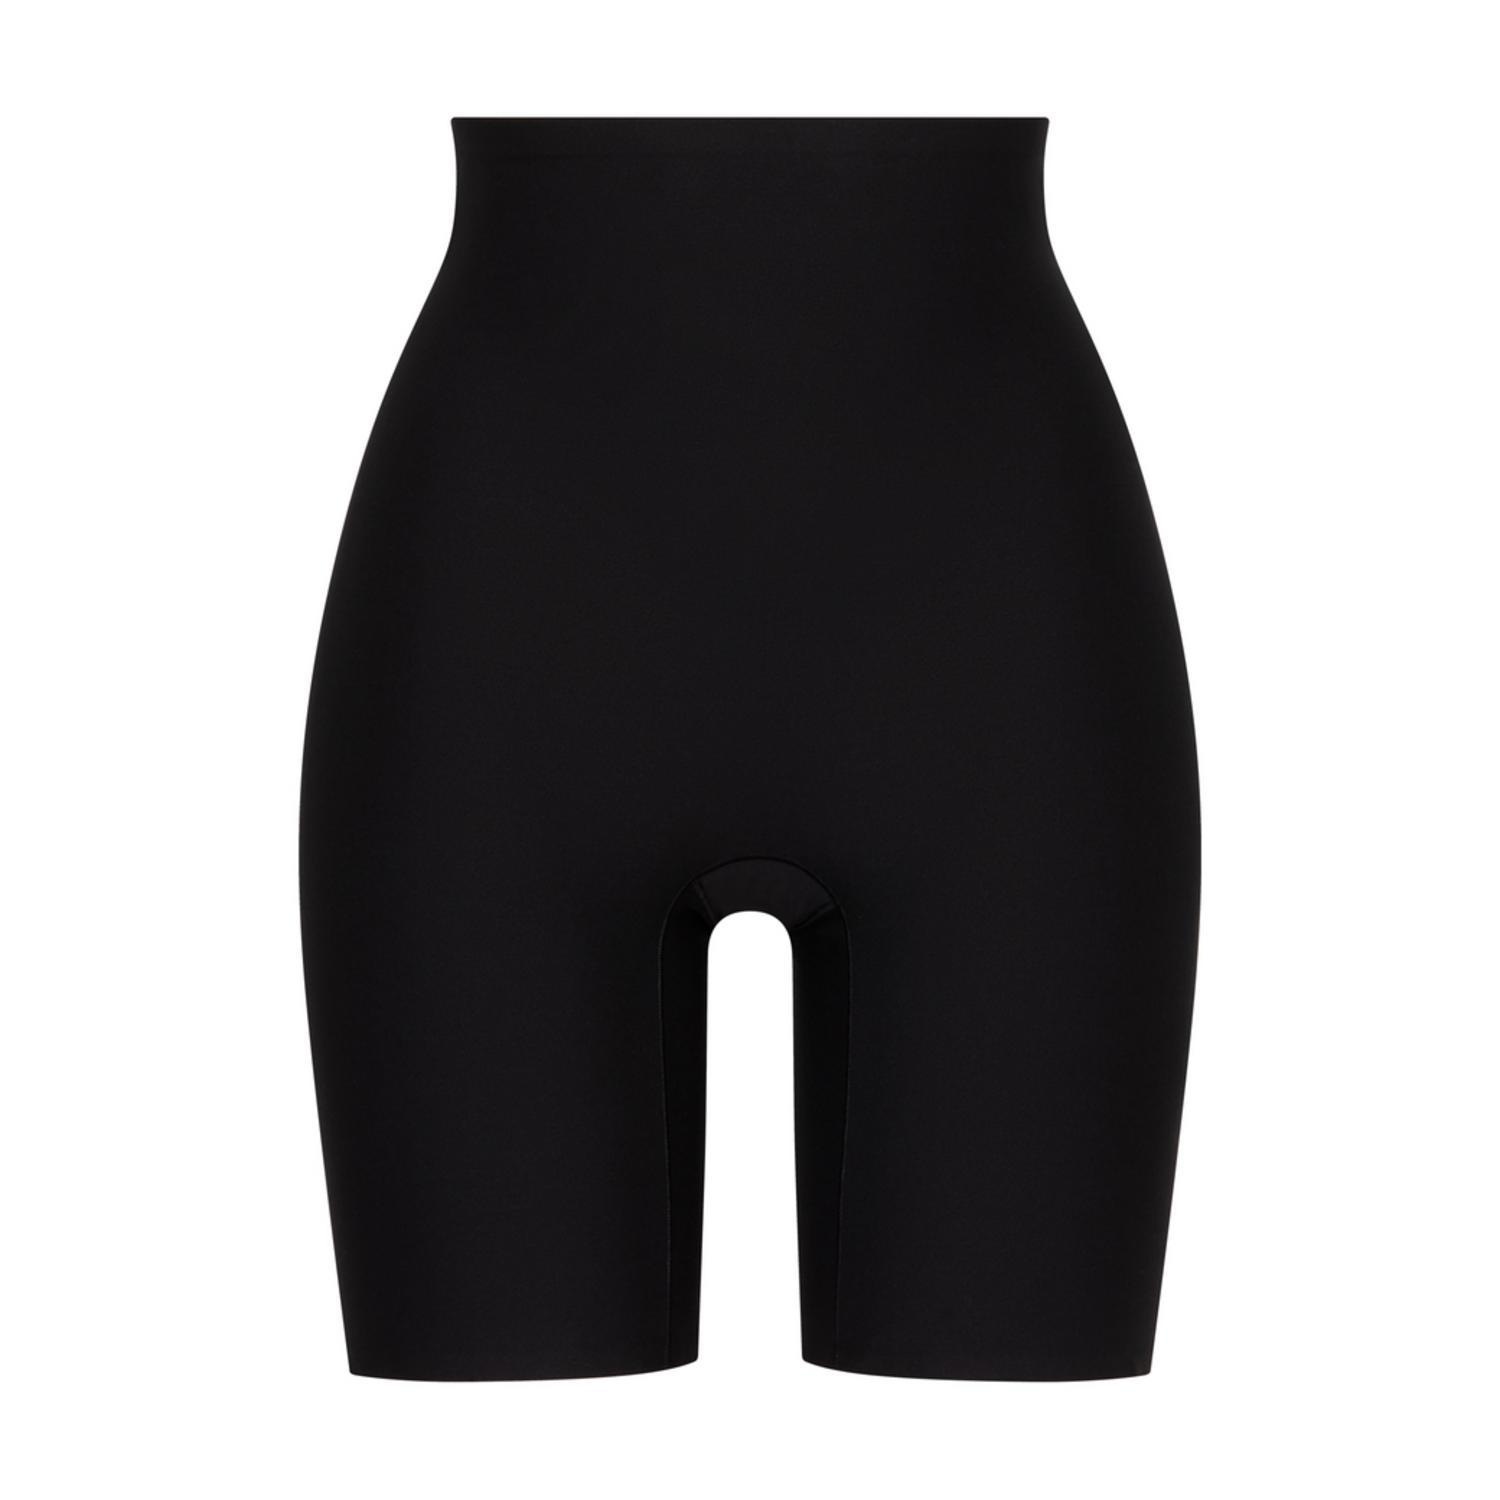 Shorts - one size + Softstretch Chantelle